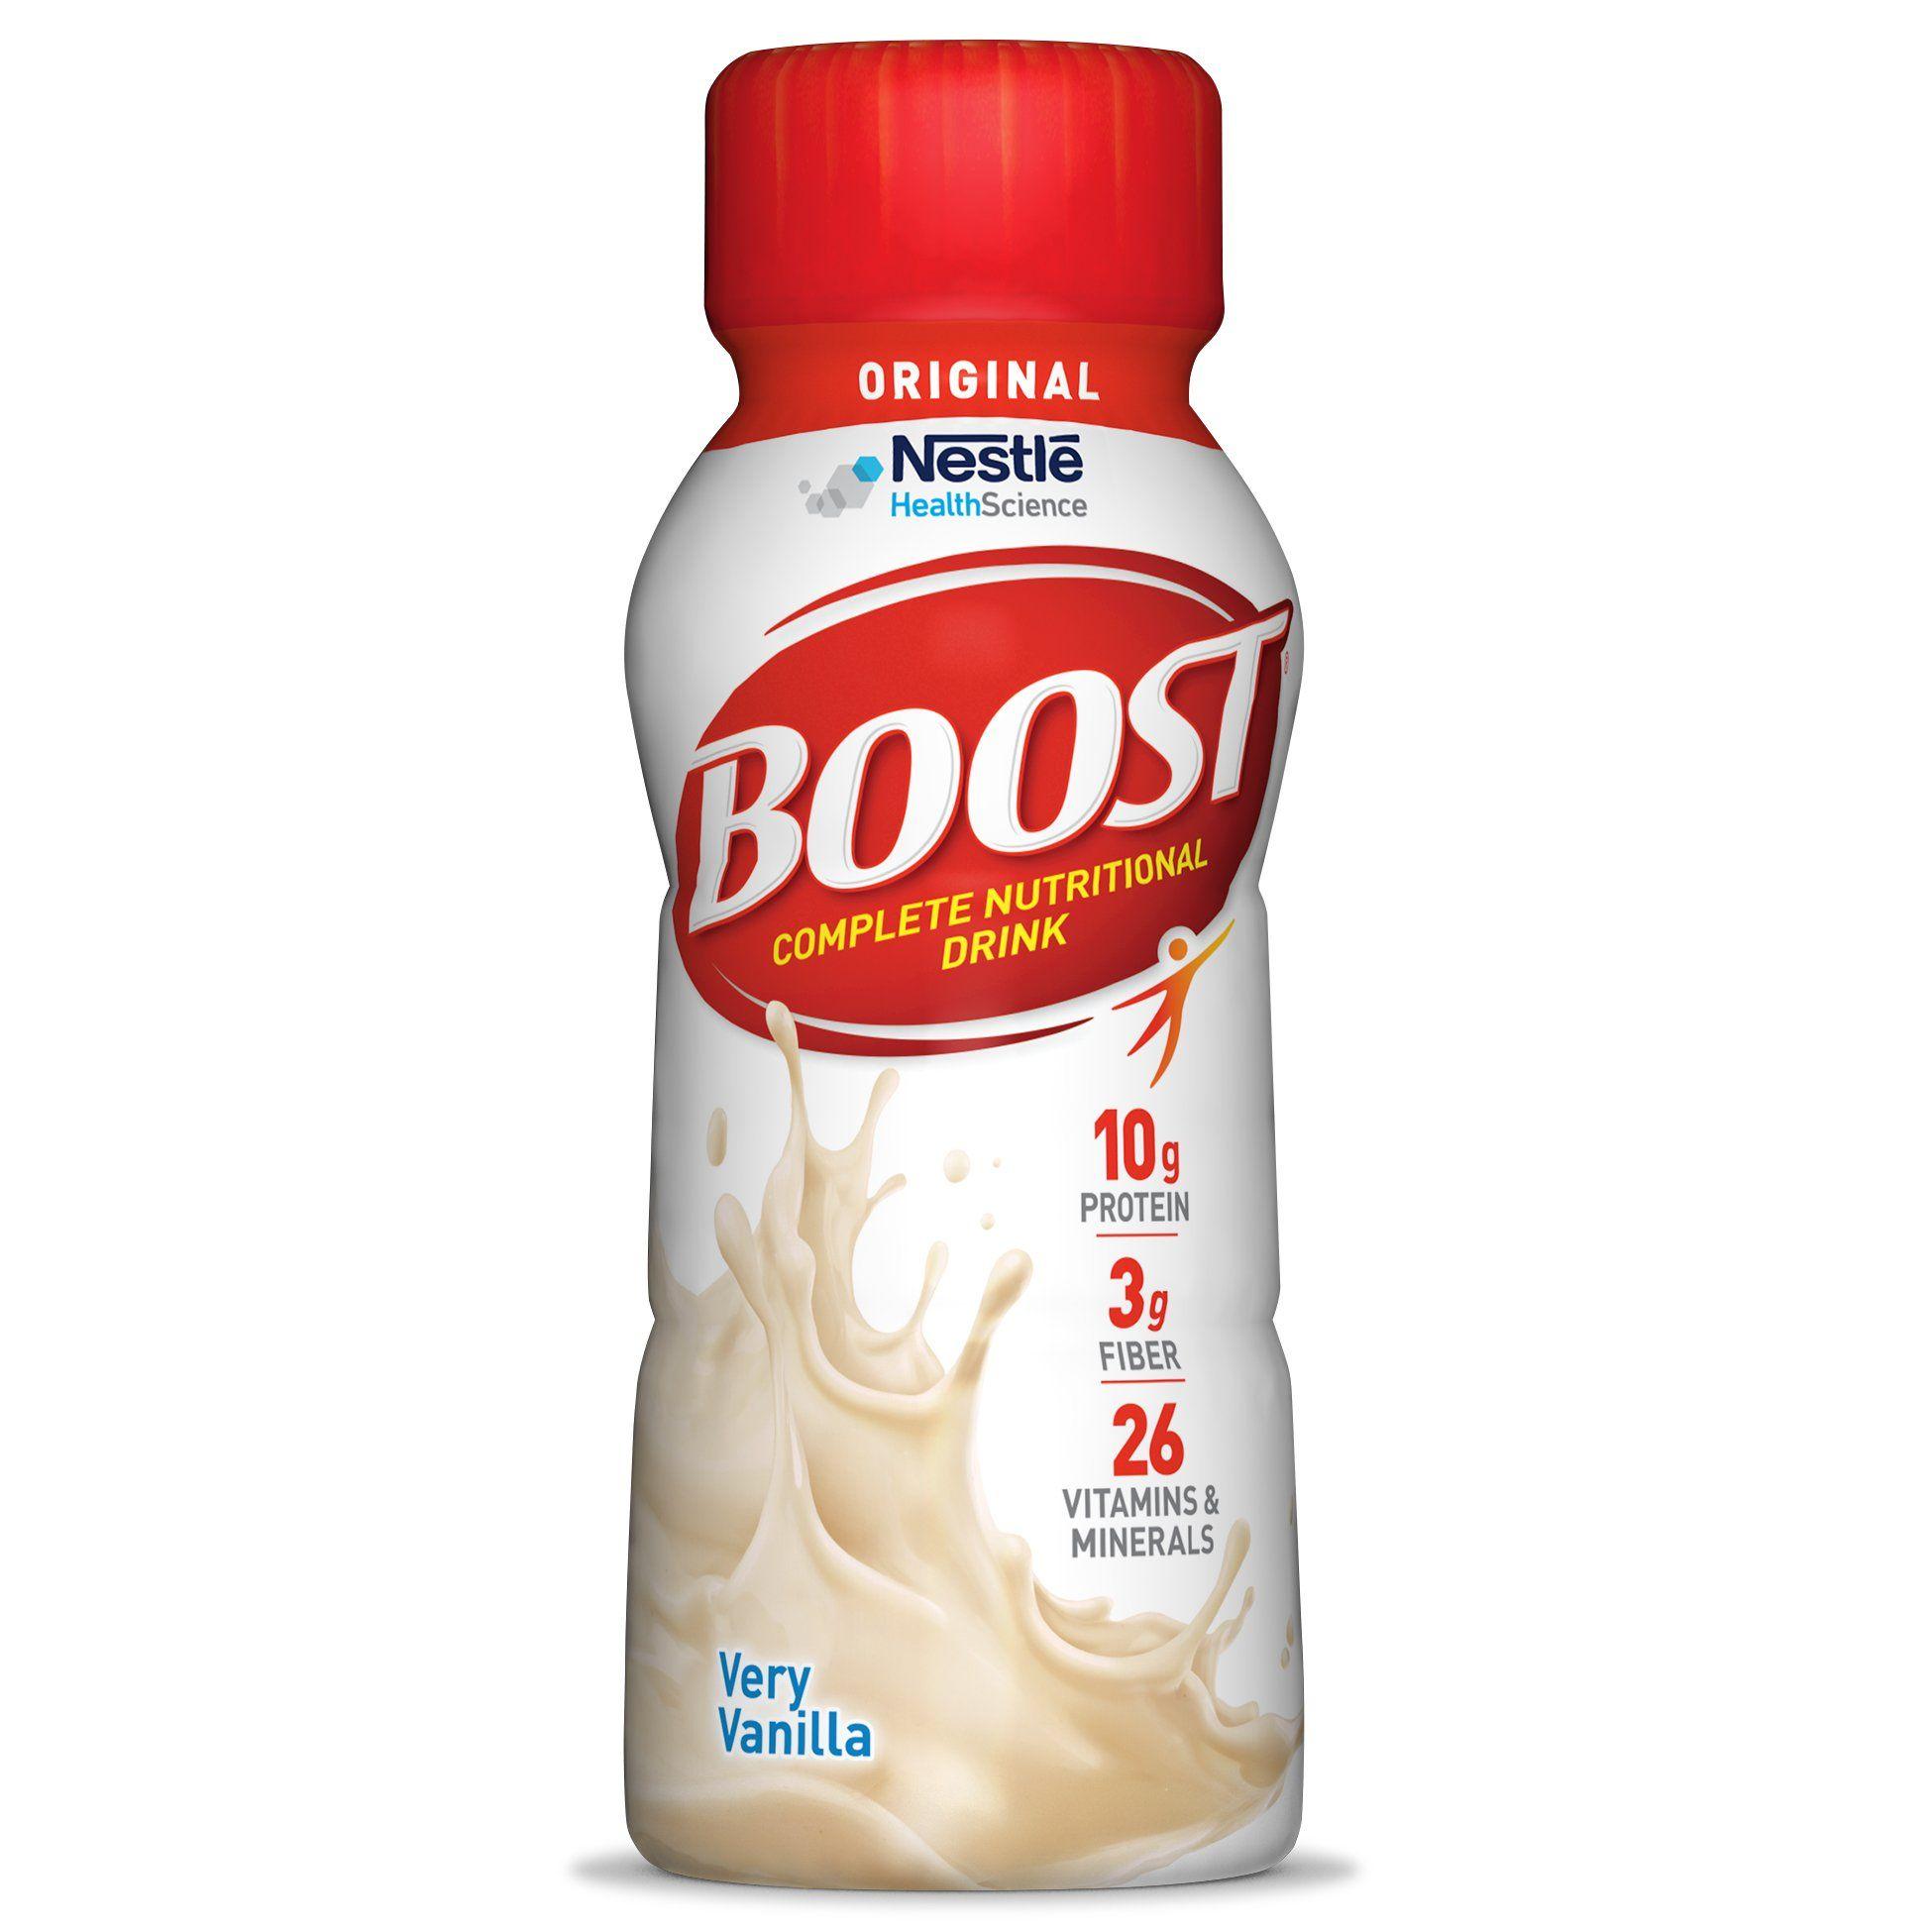 Boost Nutritional Drink Logo - Amazon.com : Boost Original Complete Nutritional Drink, Rich ...